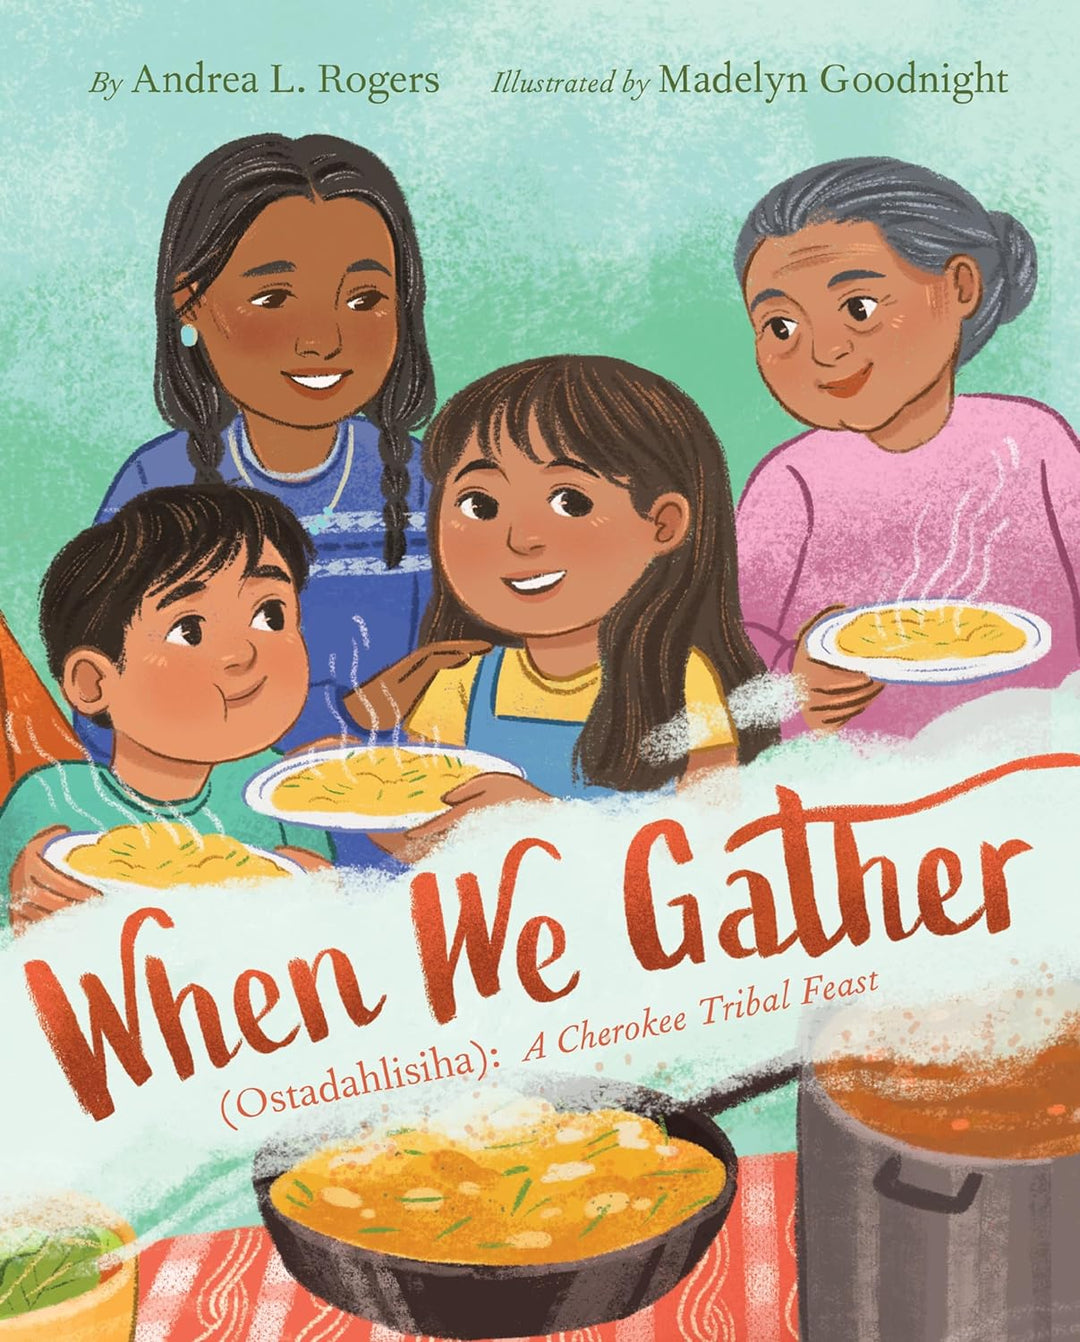 When We Gather / Ostadahlisiha: A Cherokee Tribal Feast by Andrea L. Rogers